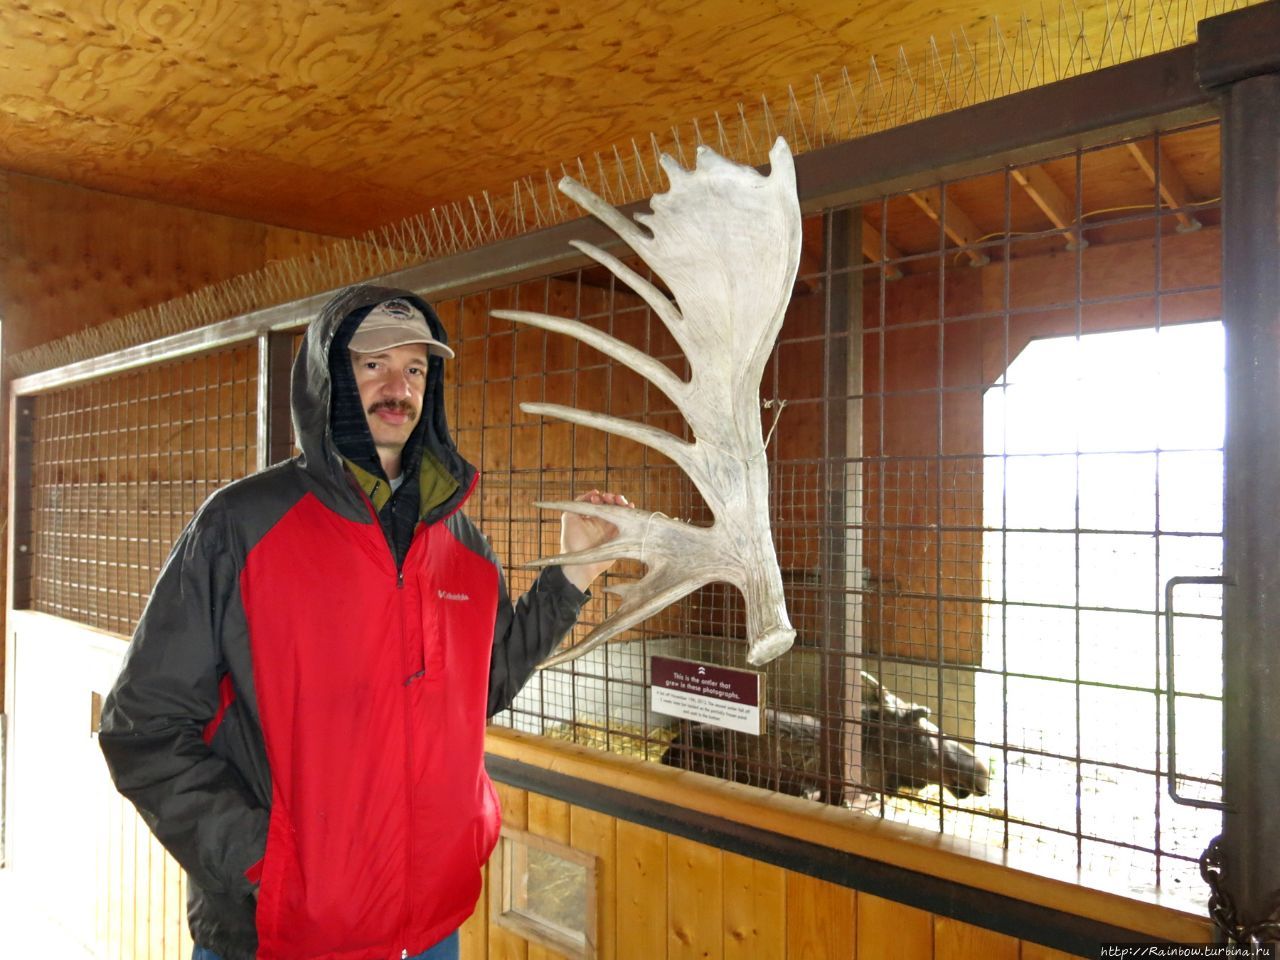 Центр охраны животных Аляски Анкоридж, CША